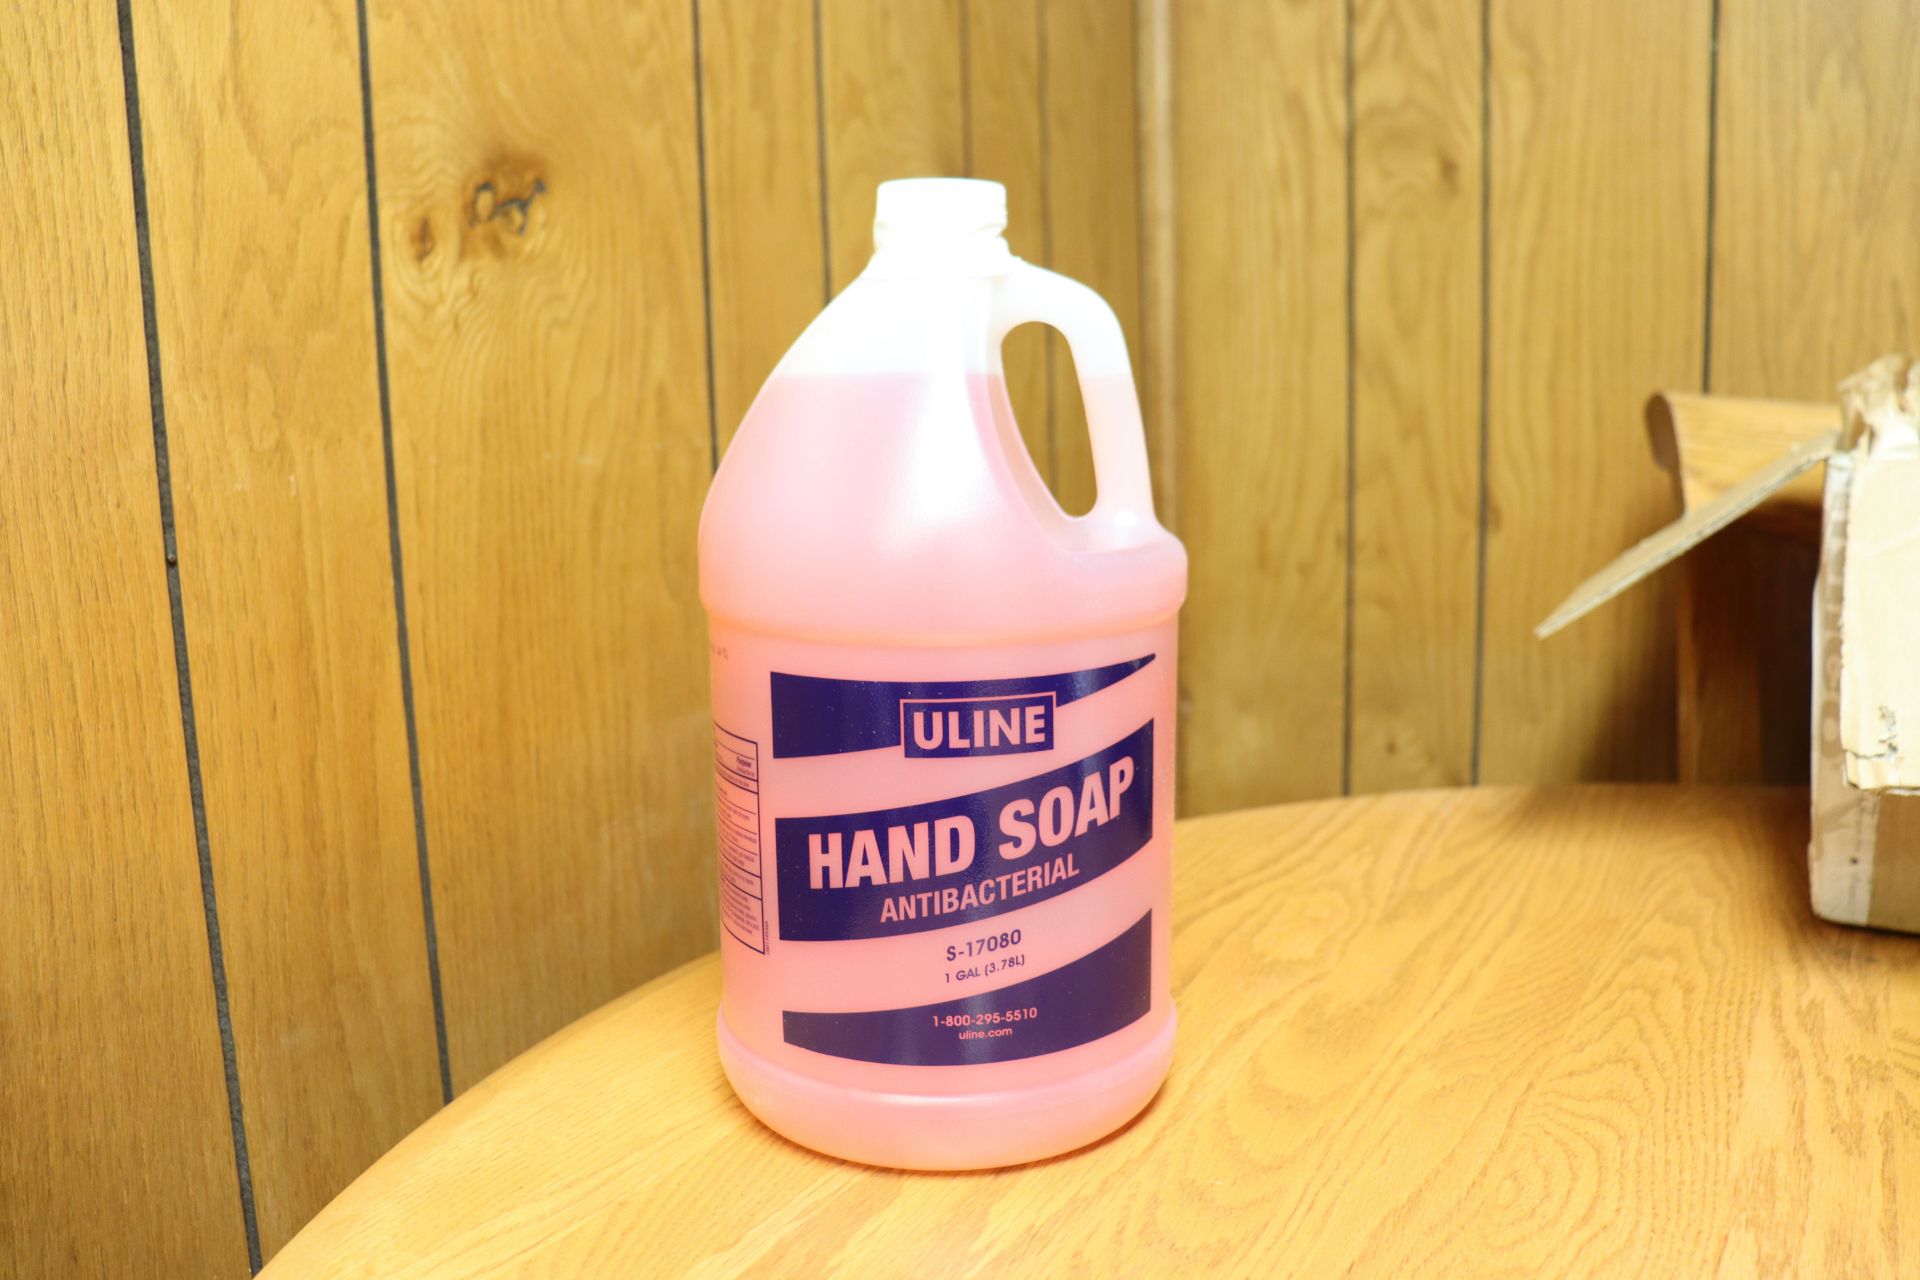 Uline Antibacterial Hand Soap - 2 cases - Image 2 of 2